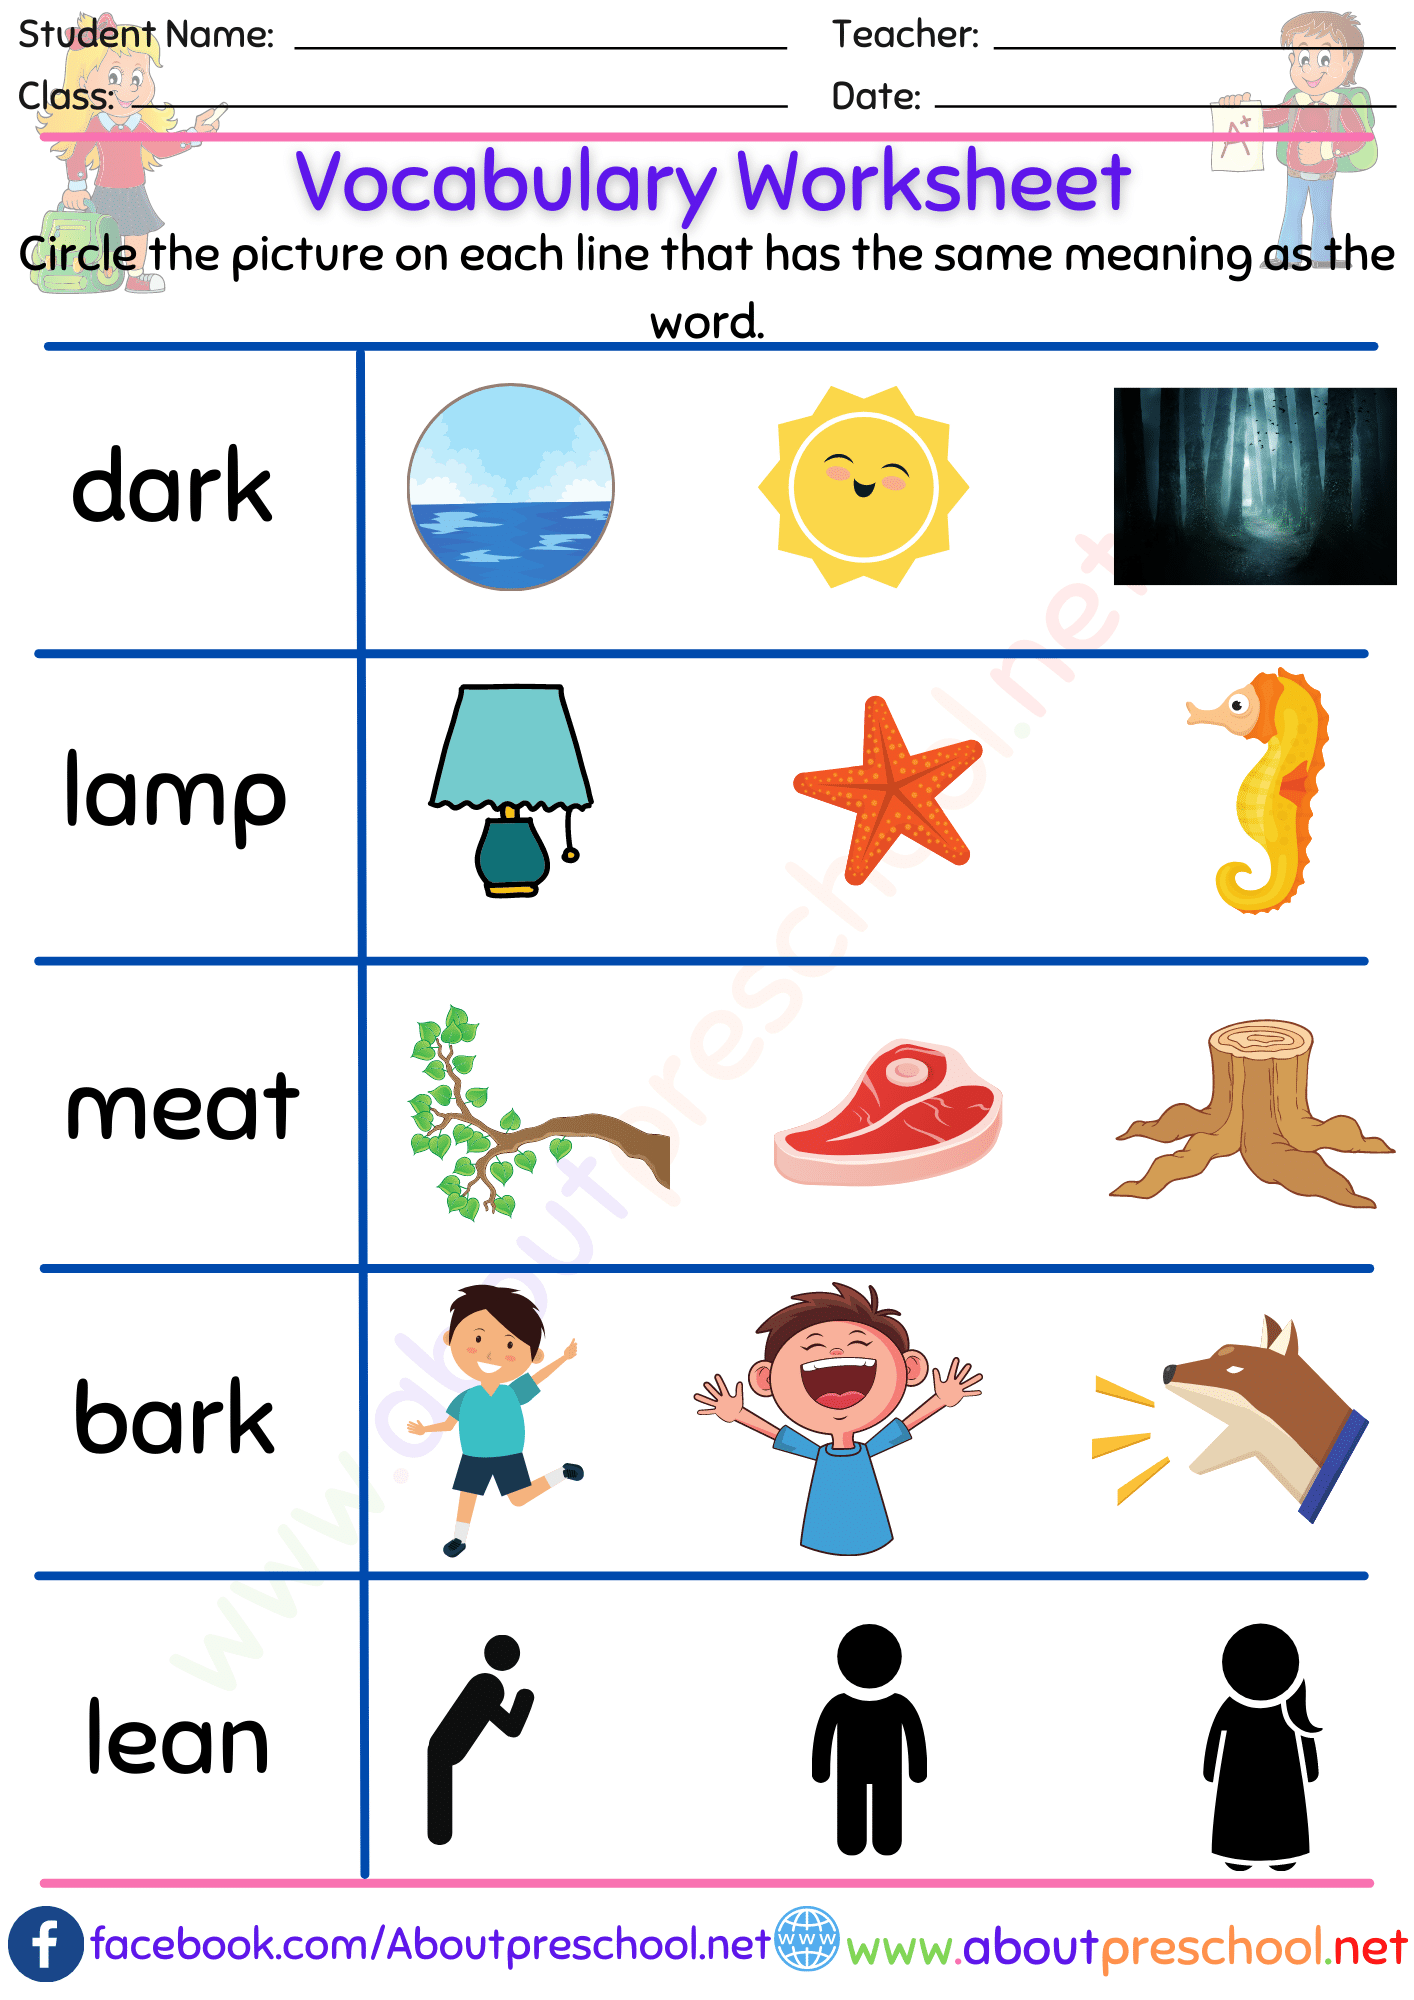 Vocabulary Worksheet-15